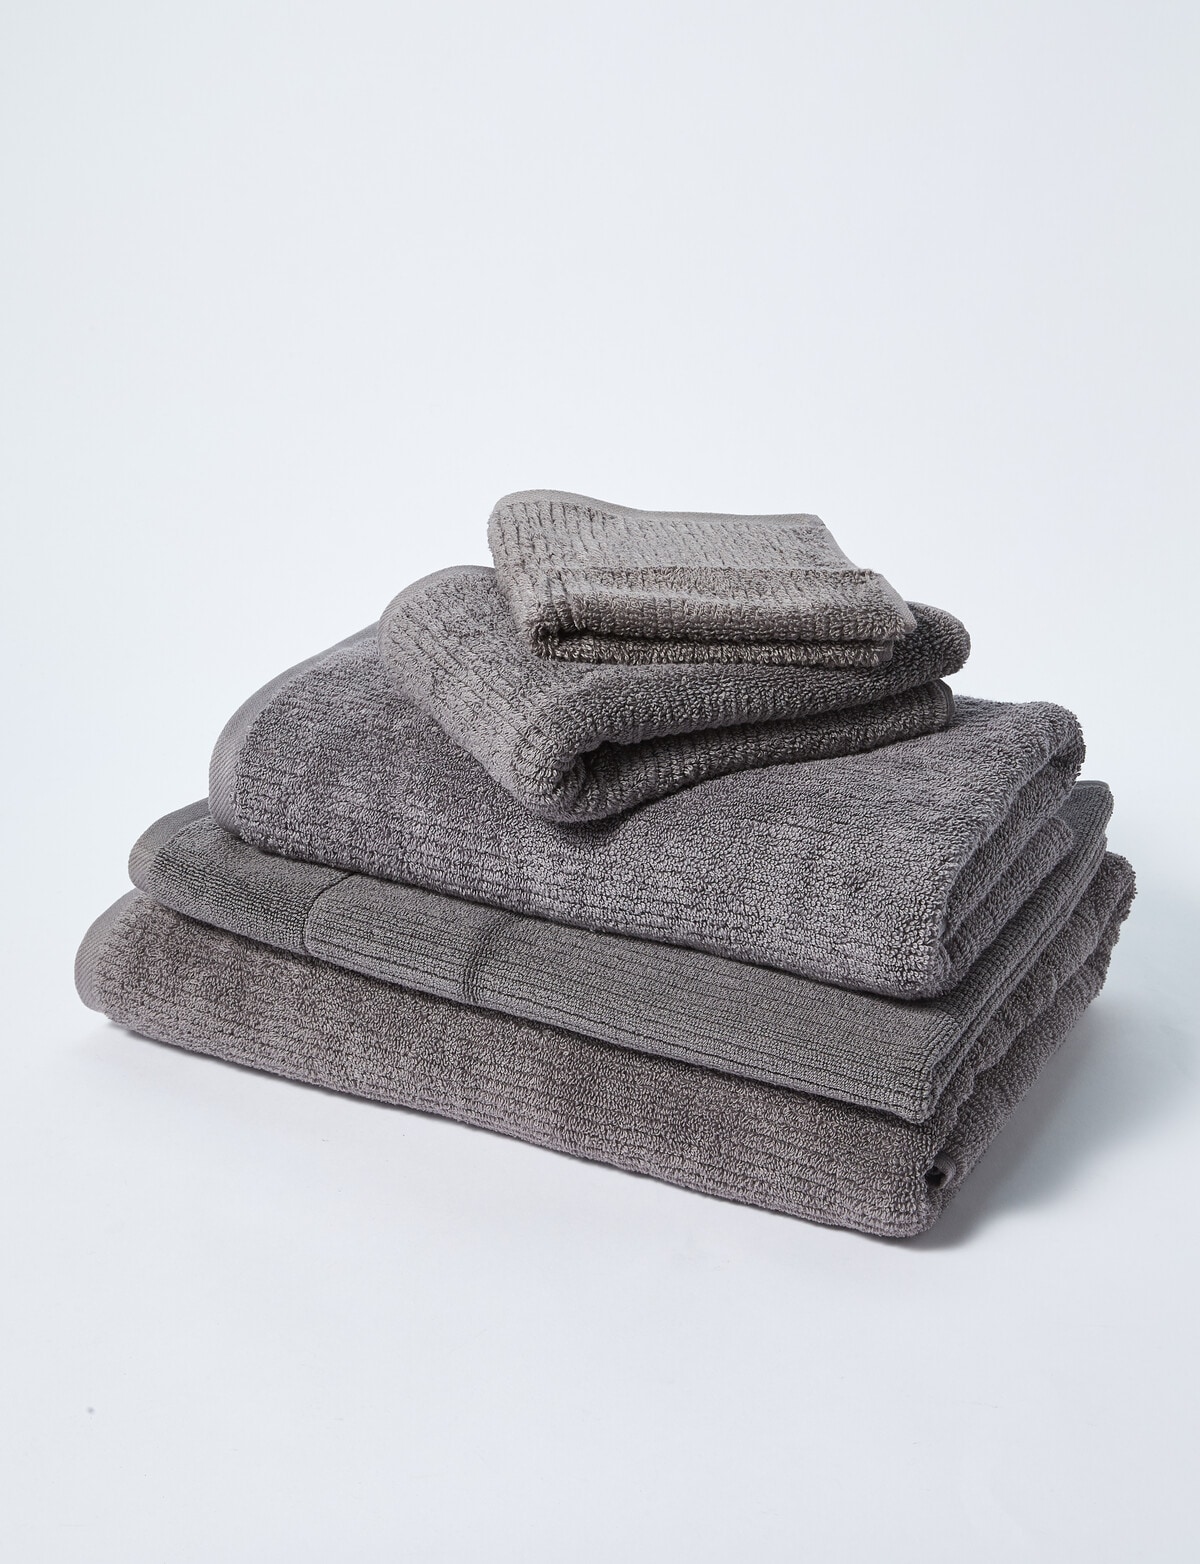 Sheridan Living Textures Towel Range - Towels & Mats